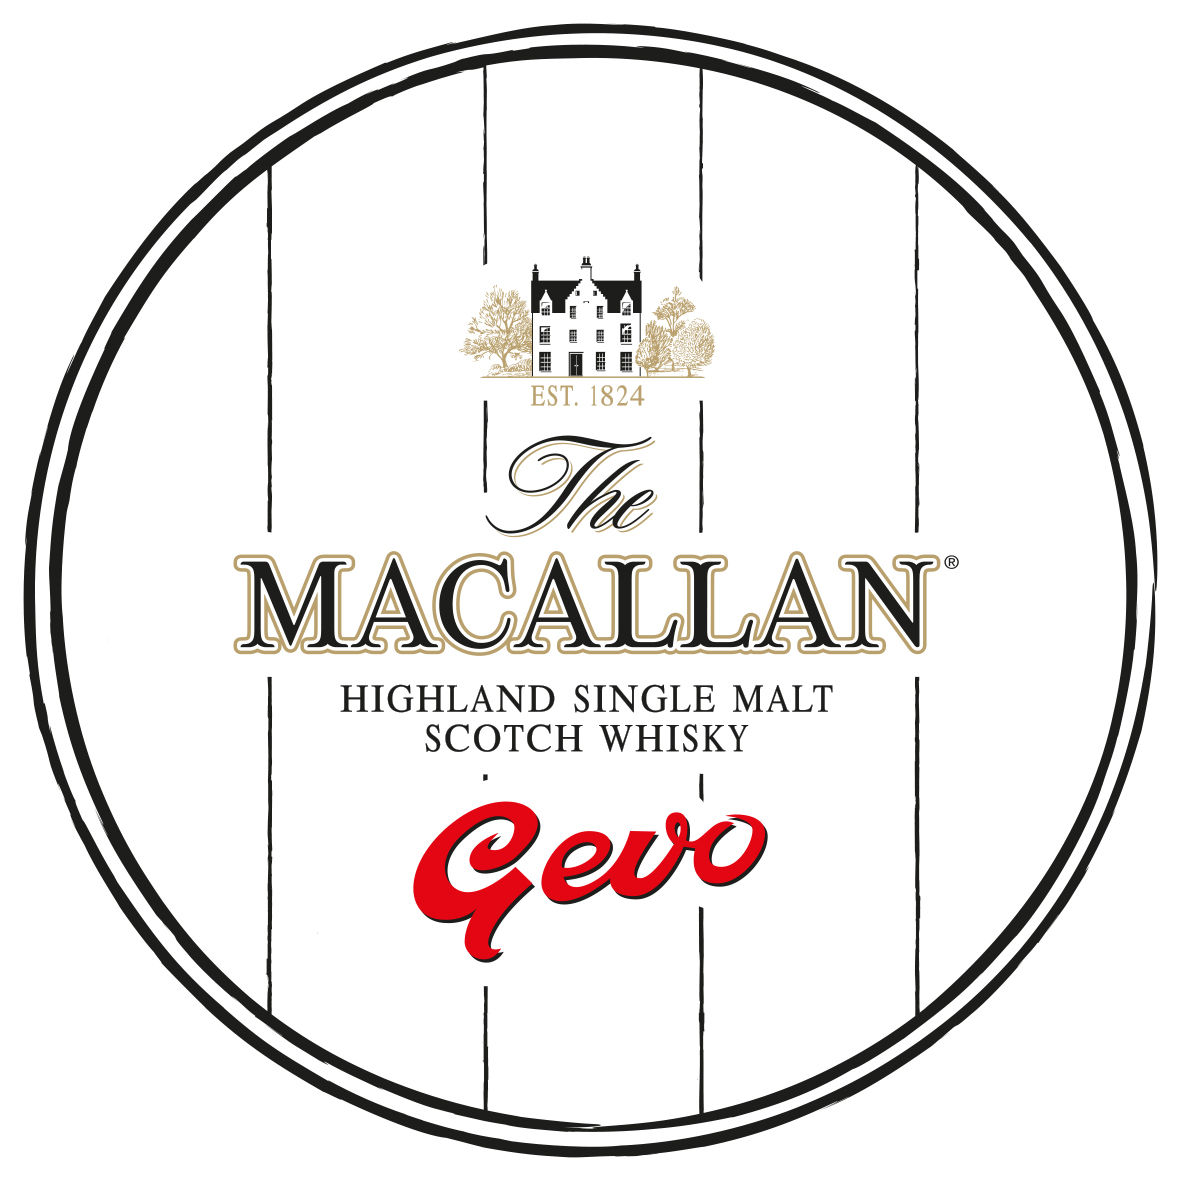 Gevo: The Macallan Store in the Netherlands